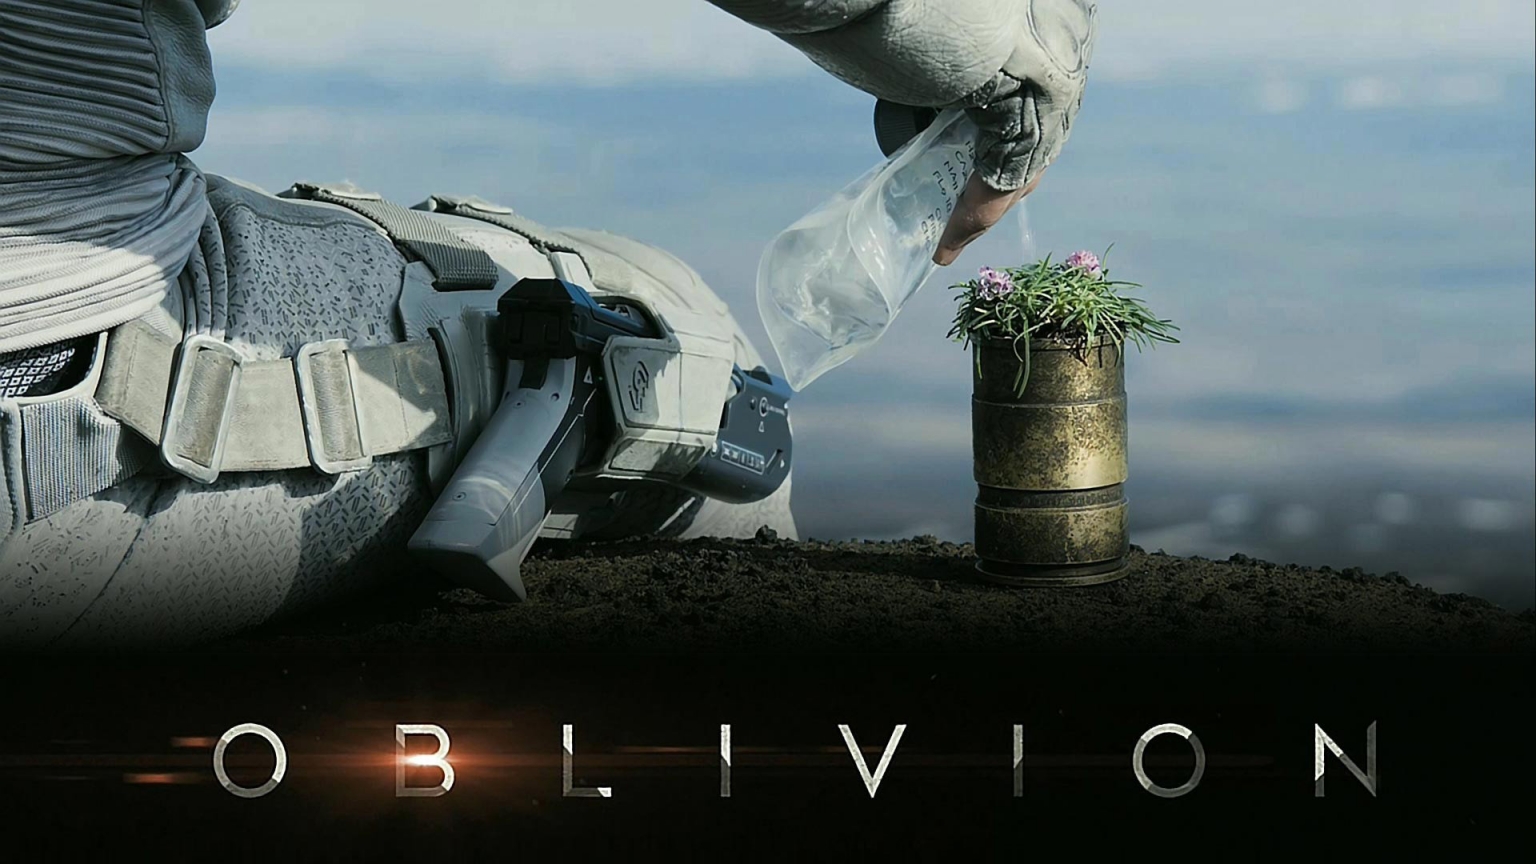 Oblivion 2013 for 1536 x 864 HDTV resolution